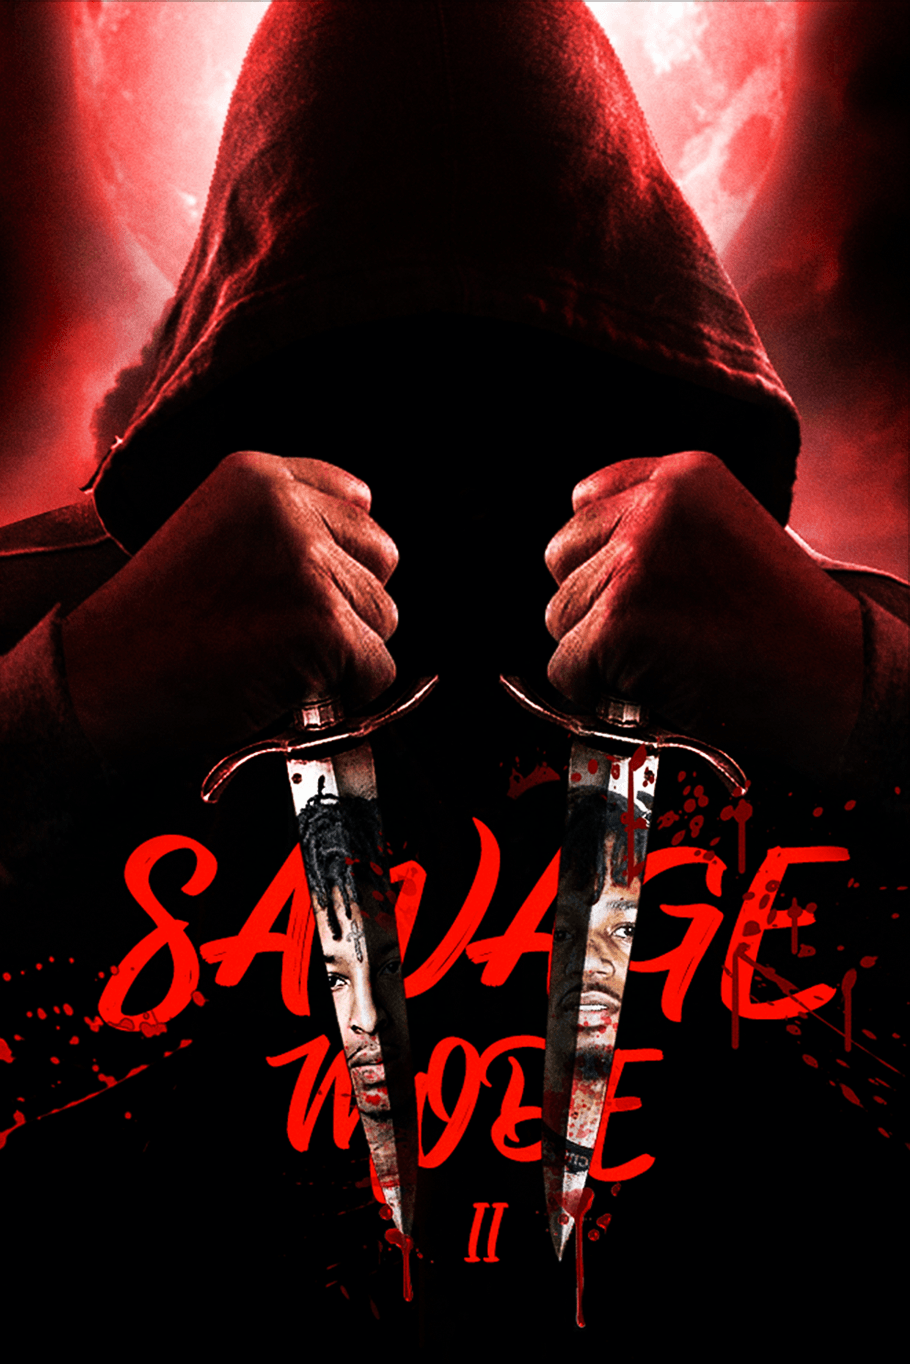 Metro Boomin x 21 Savage Poster - Posters Plug